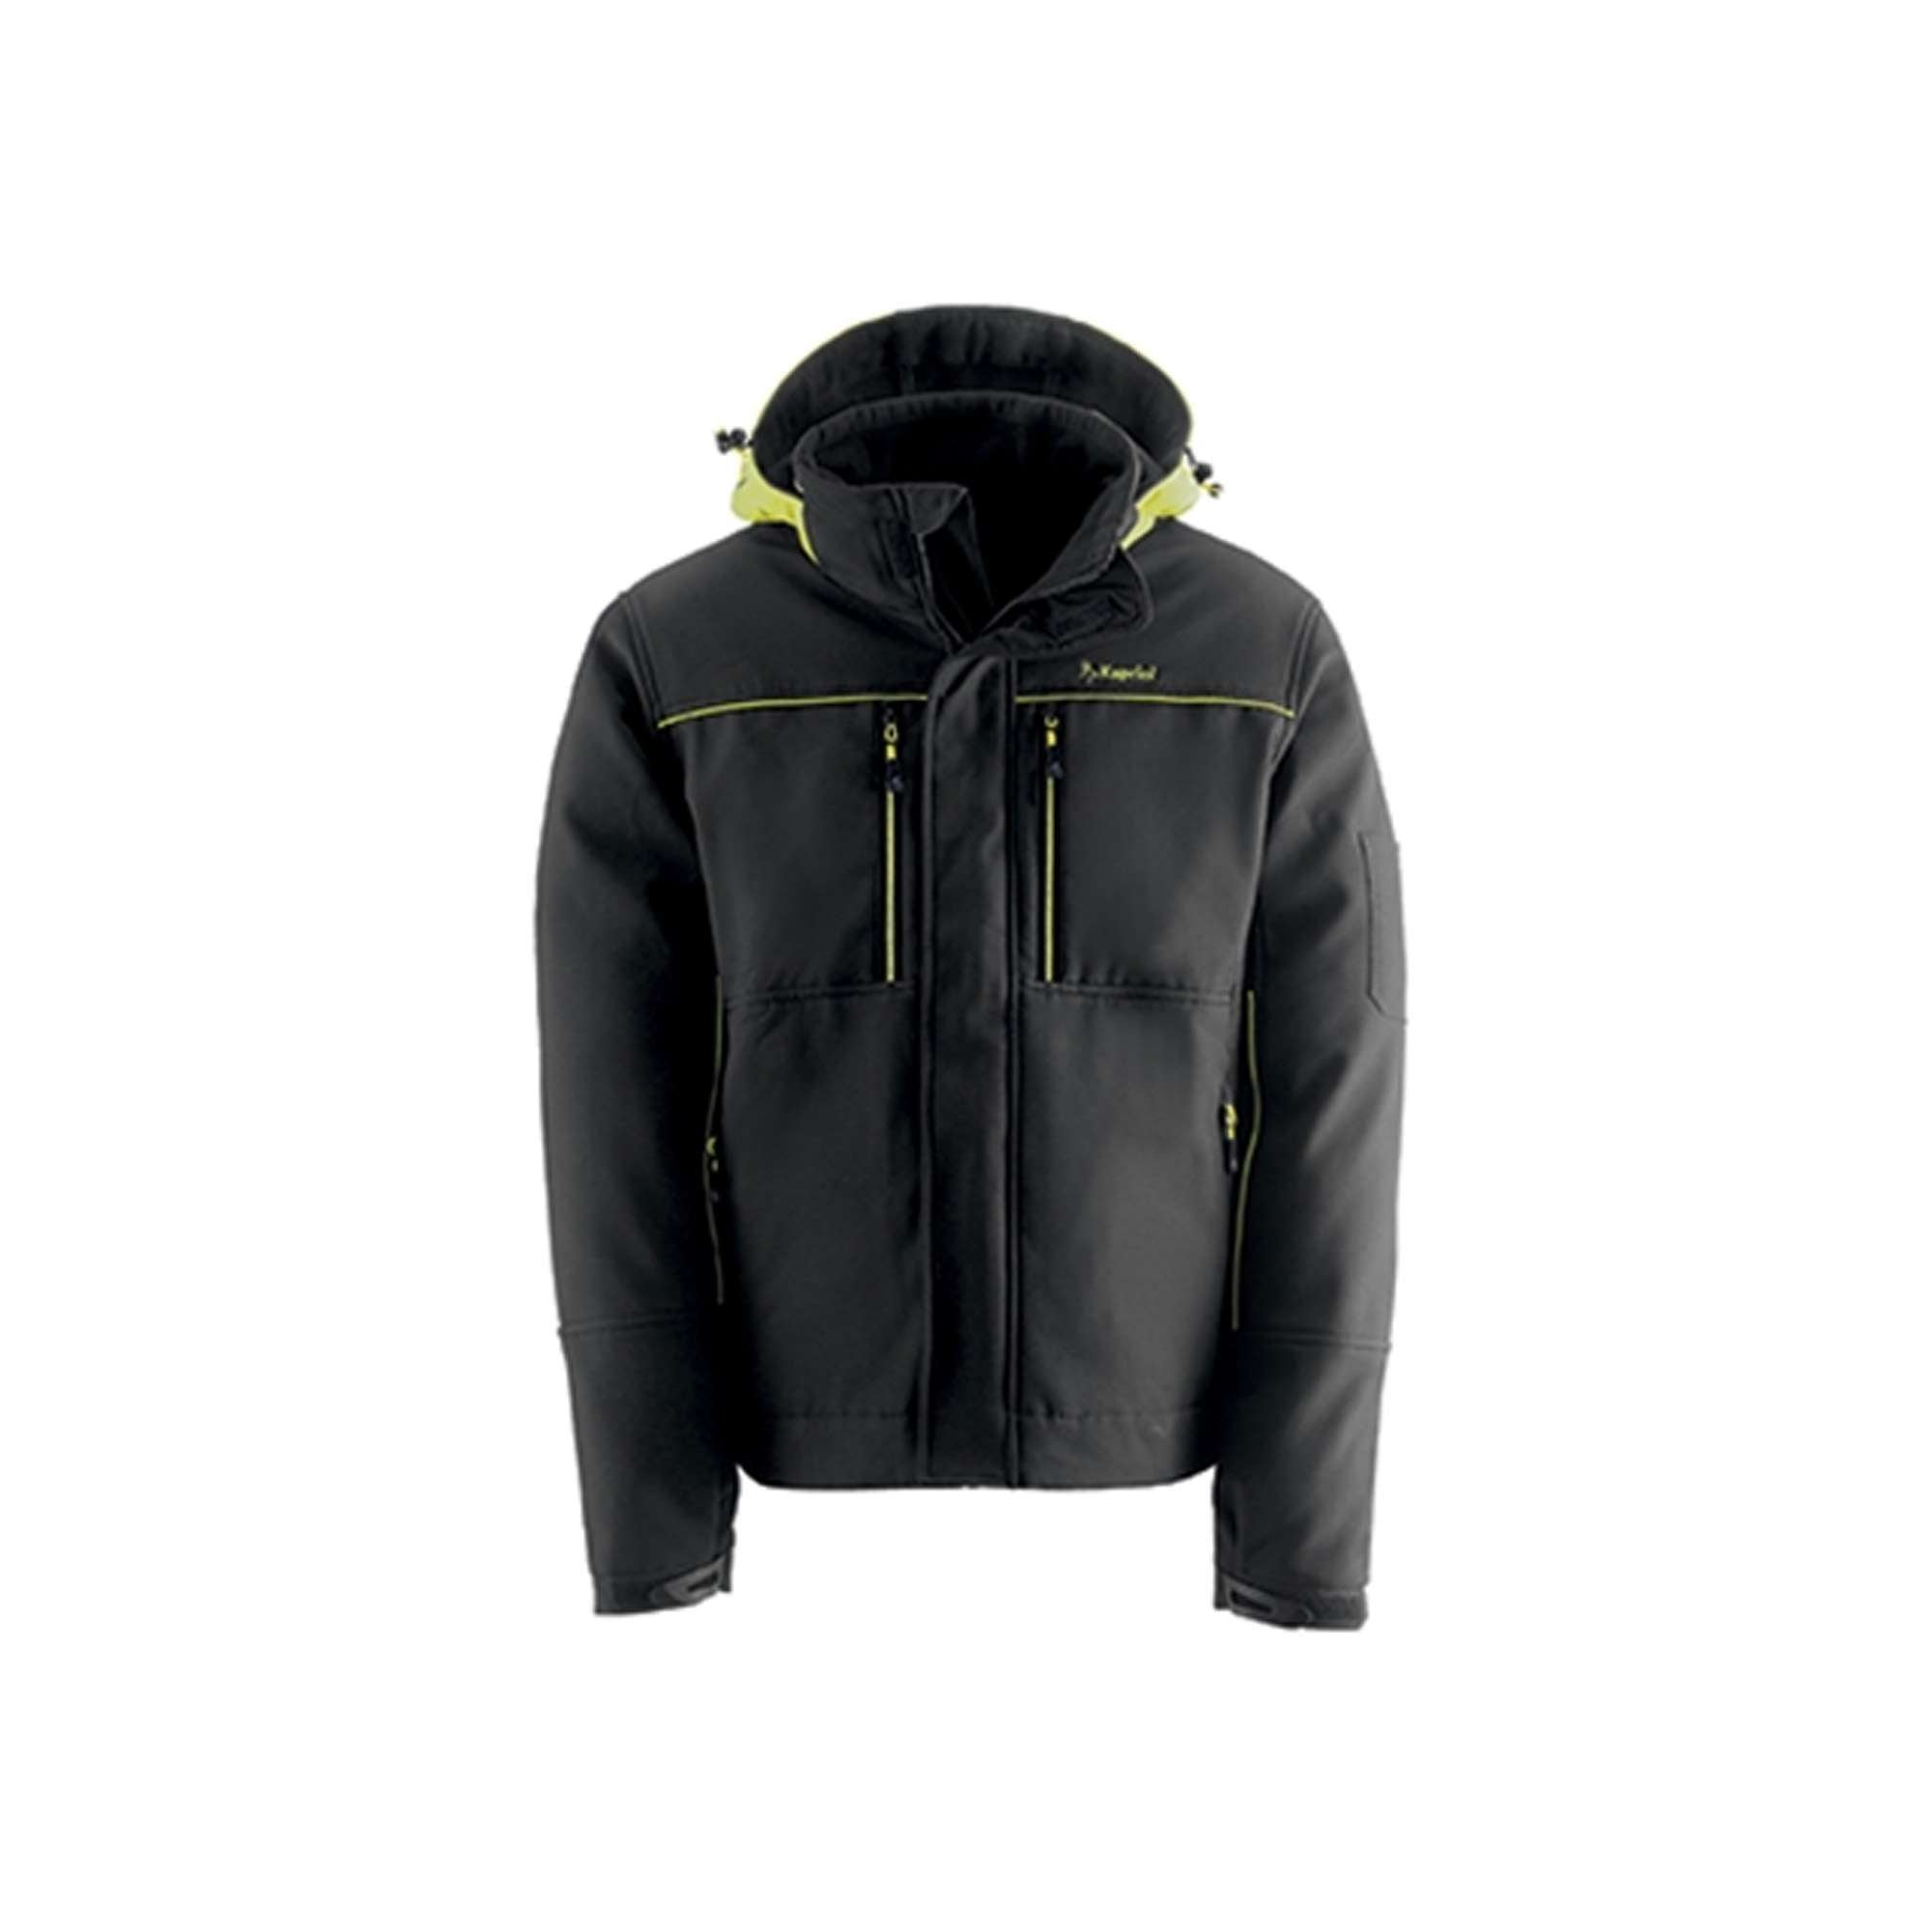 Work jacket with detachable hood, color Black - DYNAMIC Kapriol